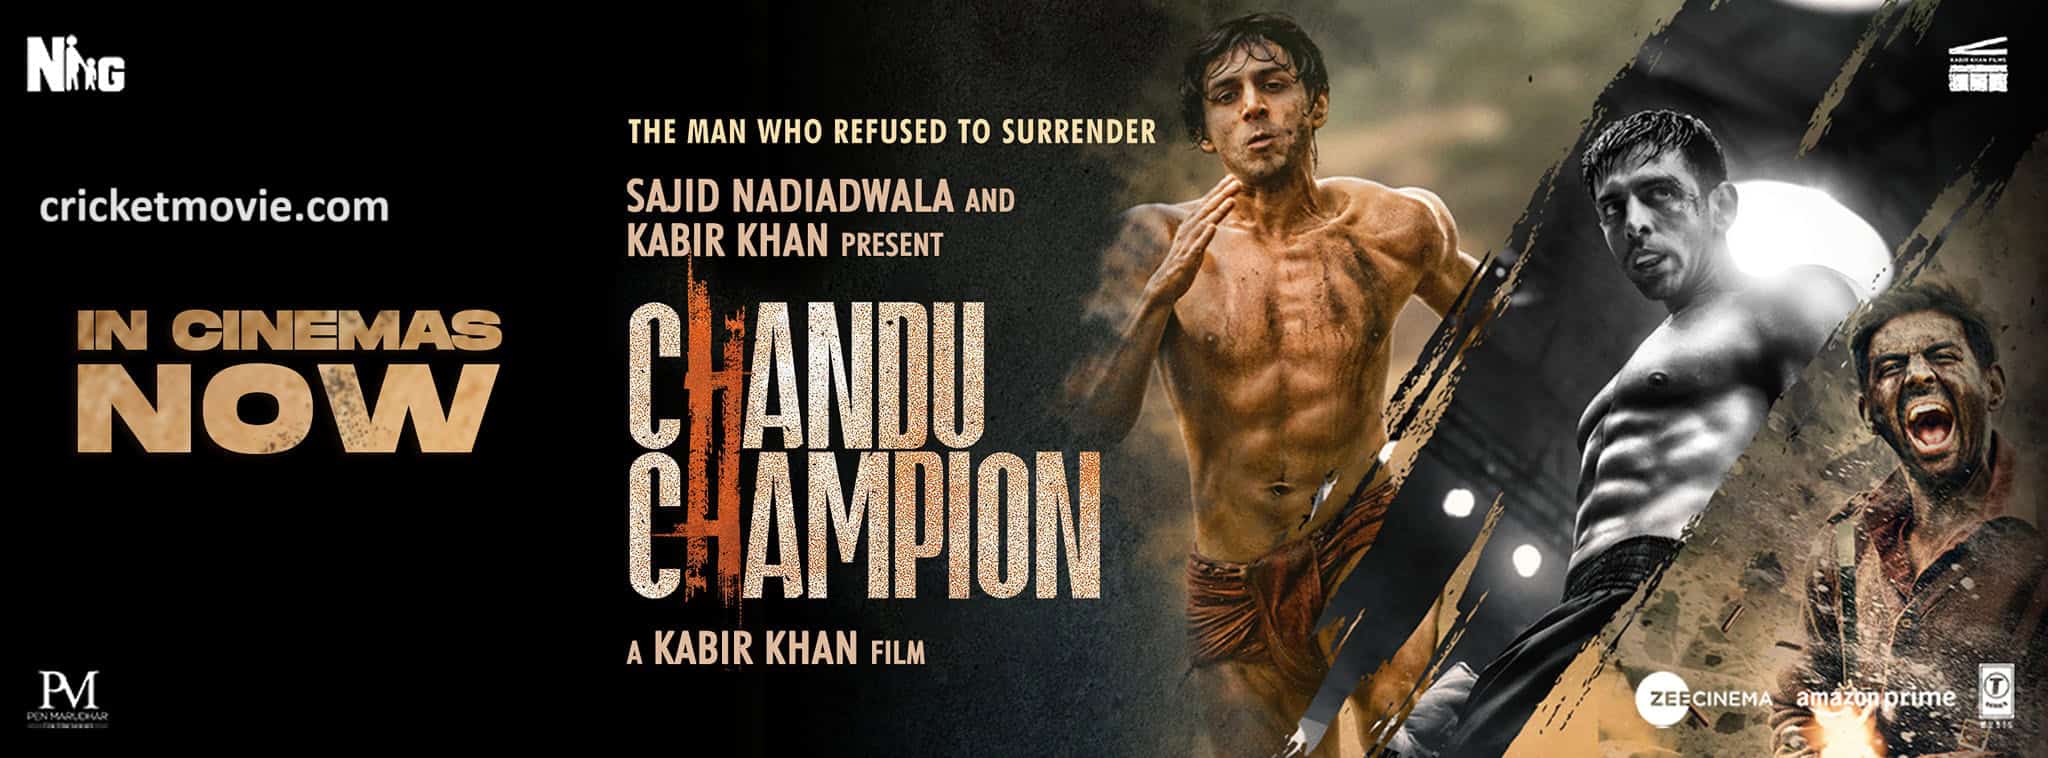 Chandu Champion Review-cricketmovie.com